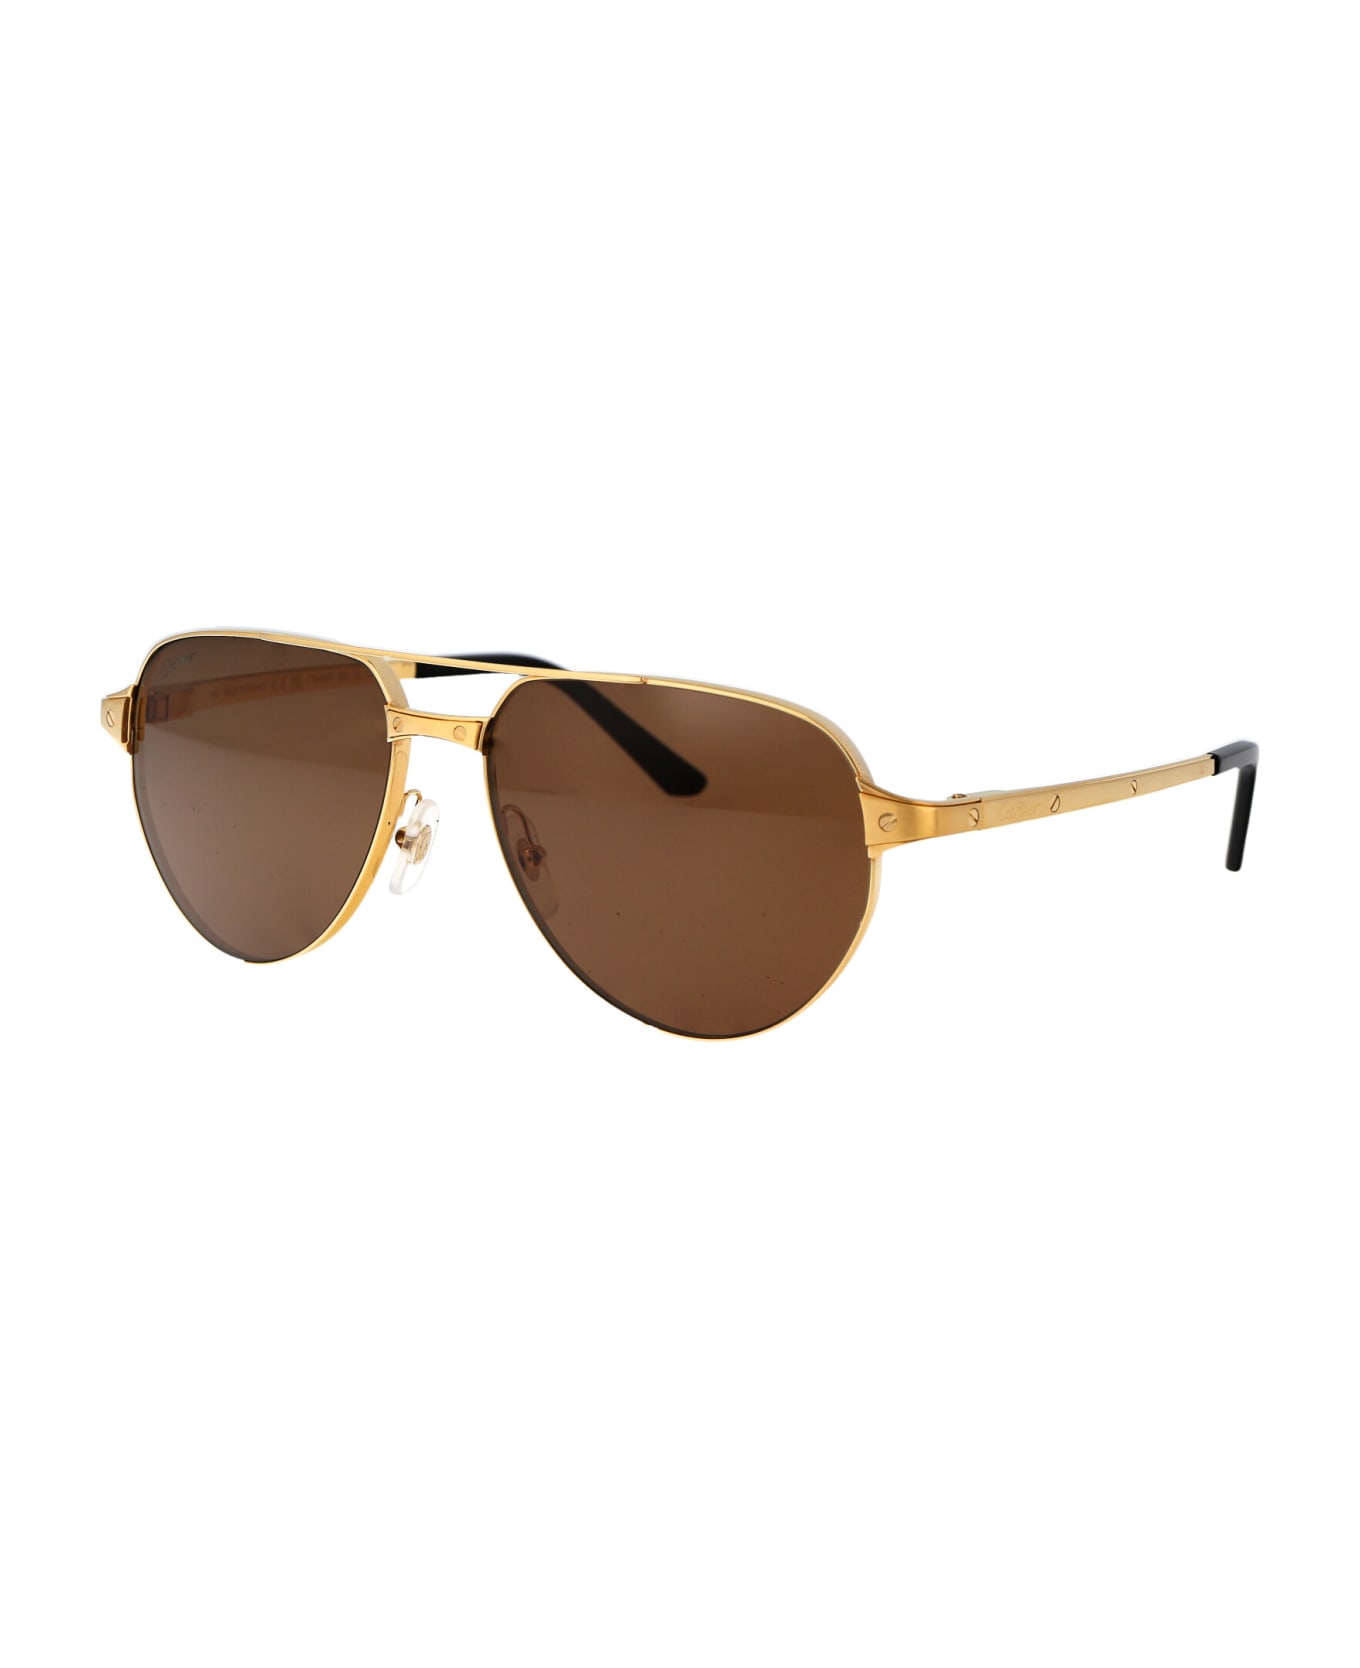 Cartier Eyewear Ct0425s Sunglasses - 003 GOLD GOLD BROWN